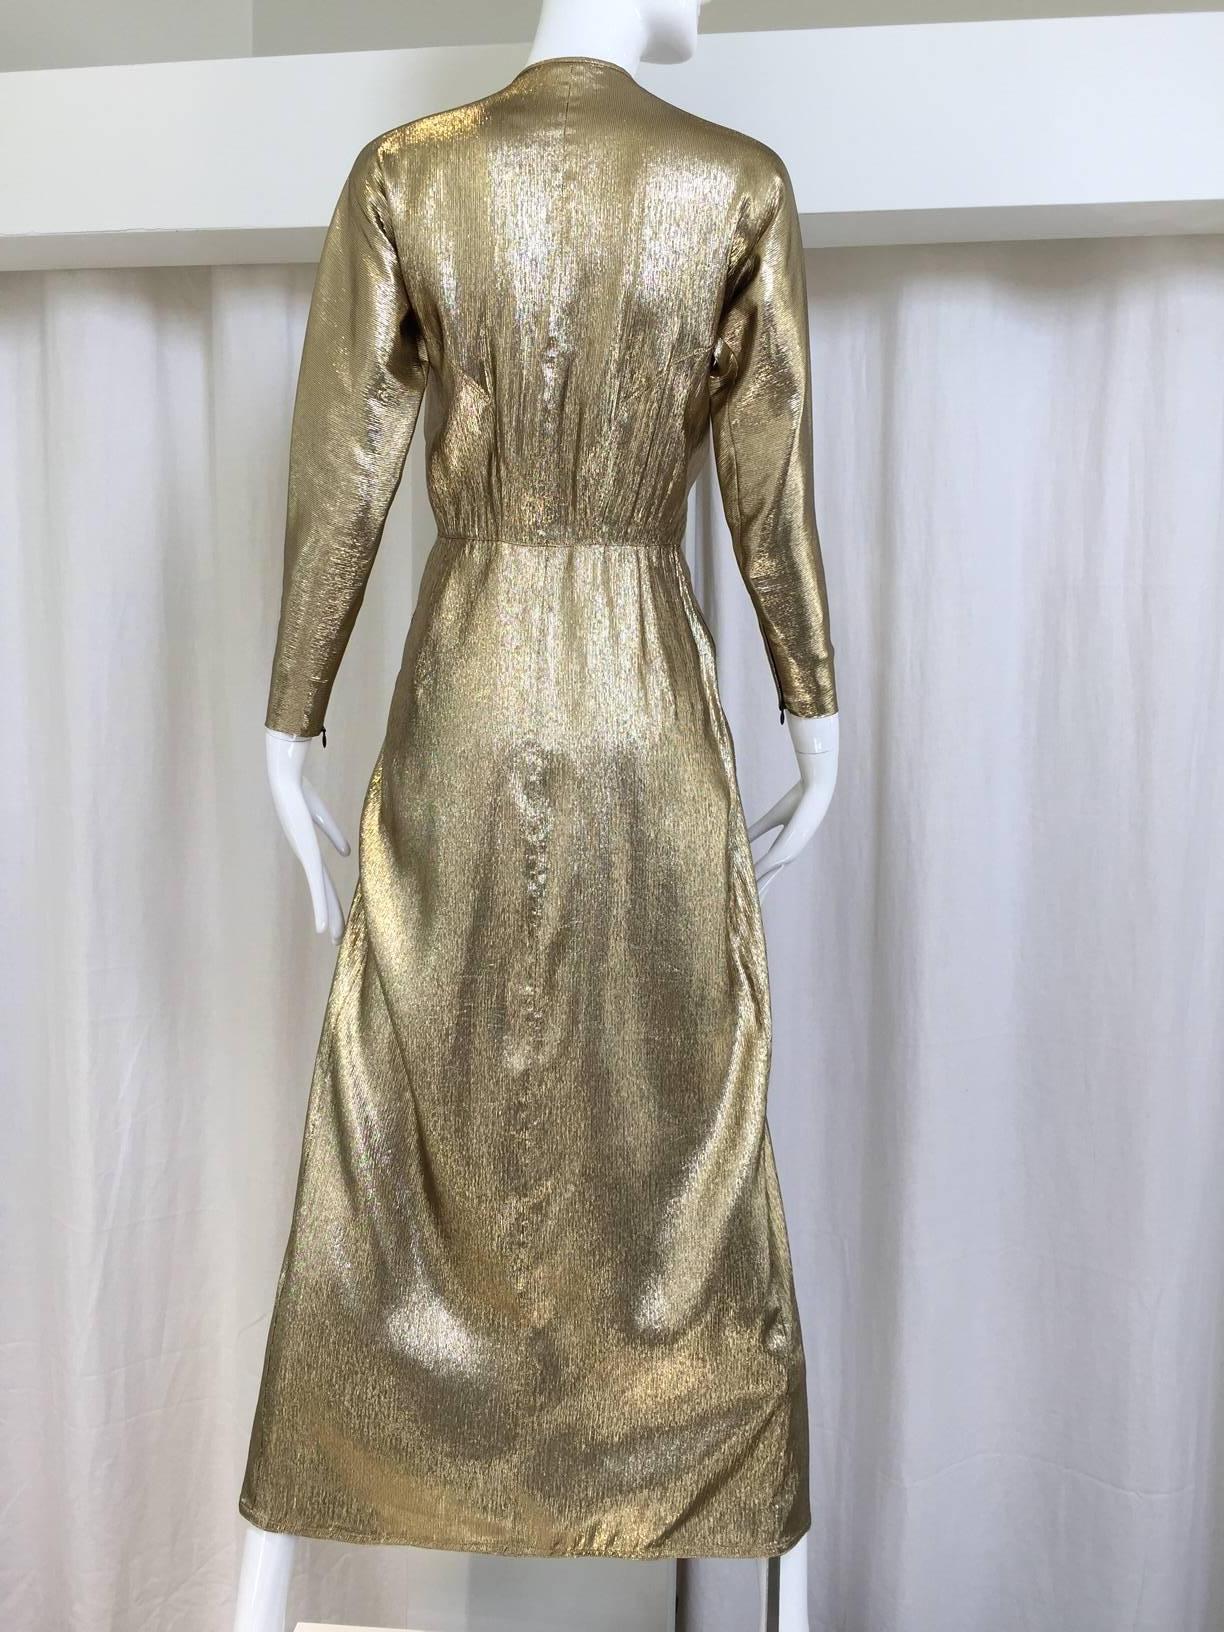 70s Geoffrey Beene silk lame gold dress with raglan sleeve.
Bust: 30